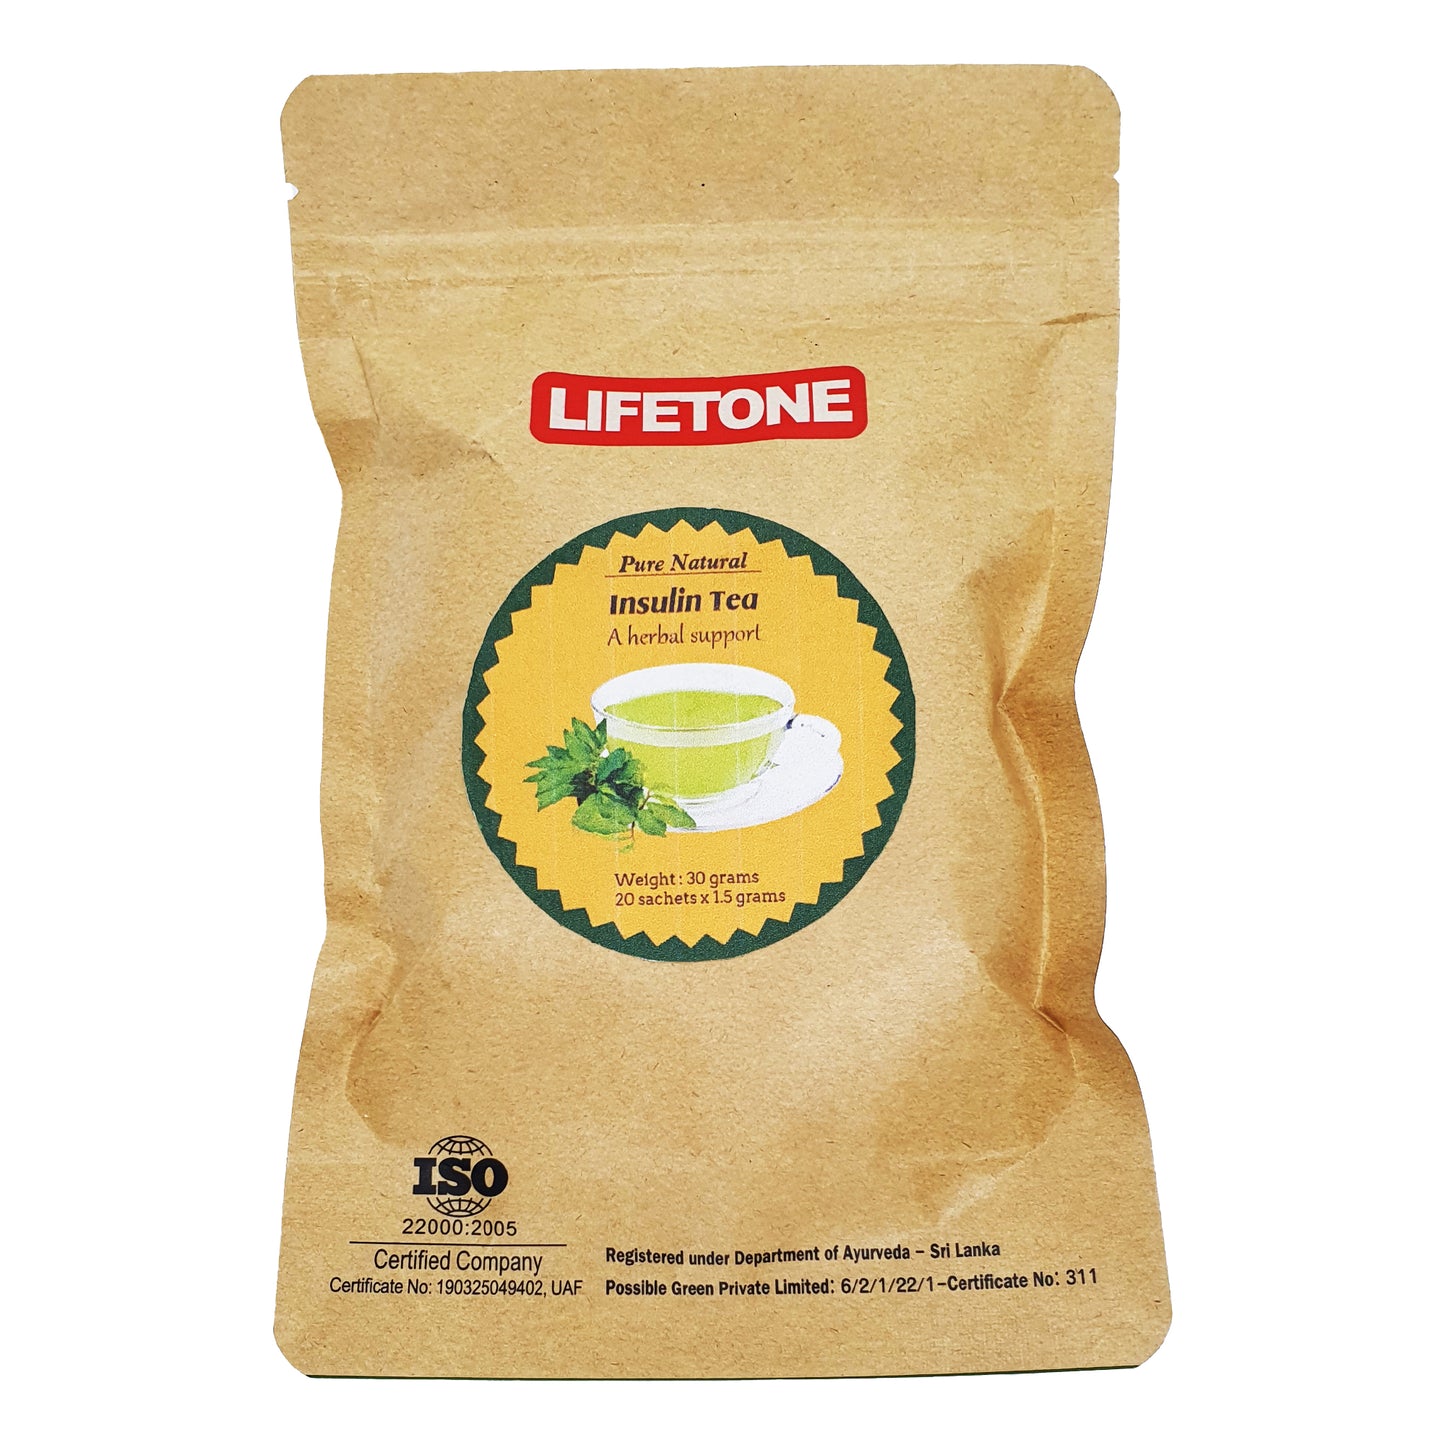 Lifetone 胰岛素茶 (40g)